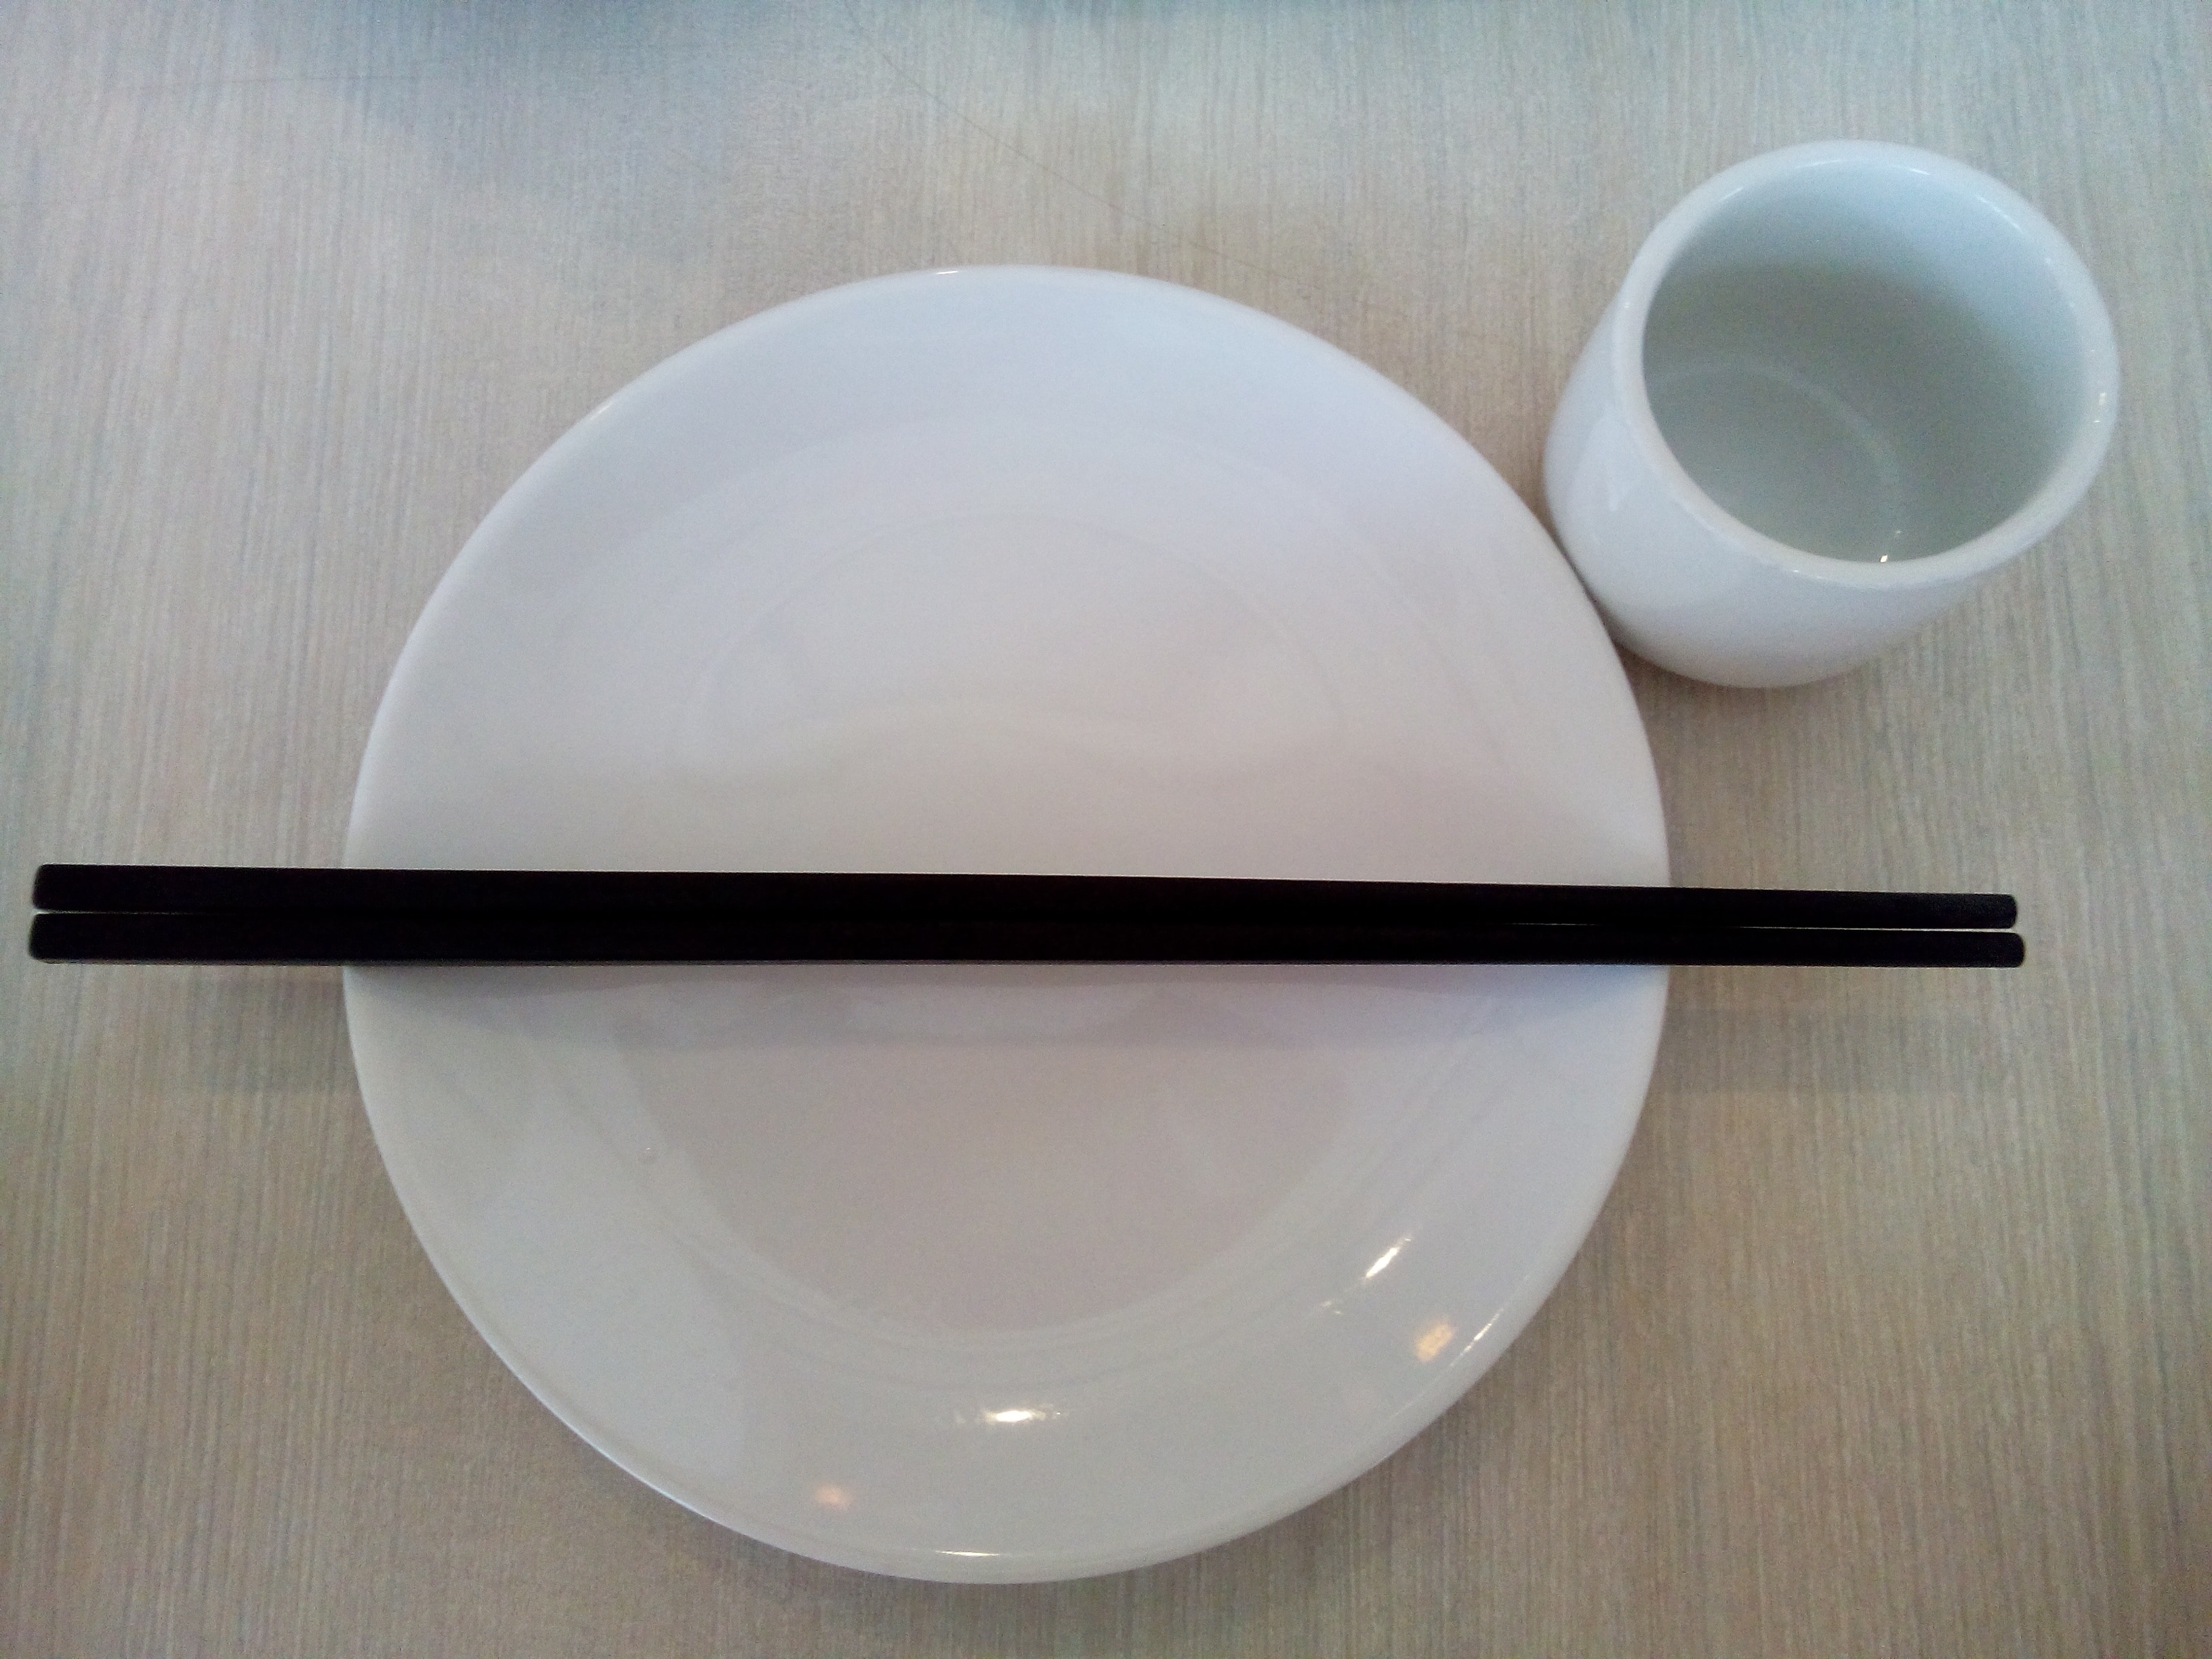 black chopsticks on white ceramic plate